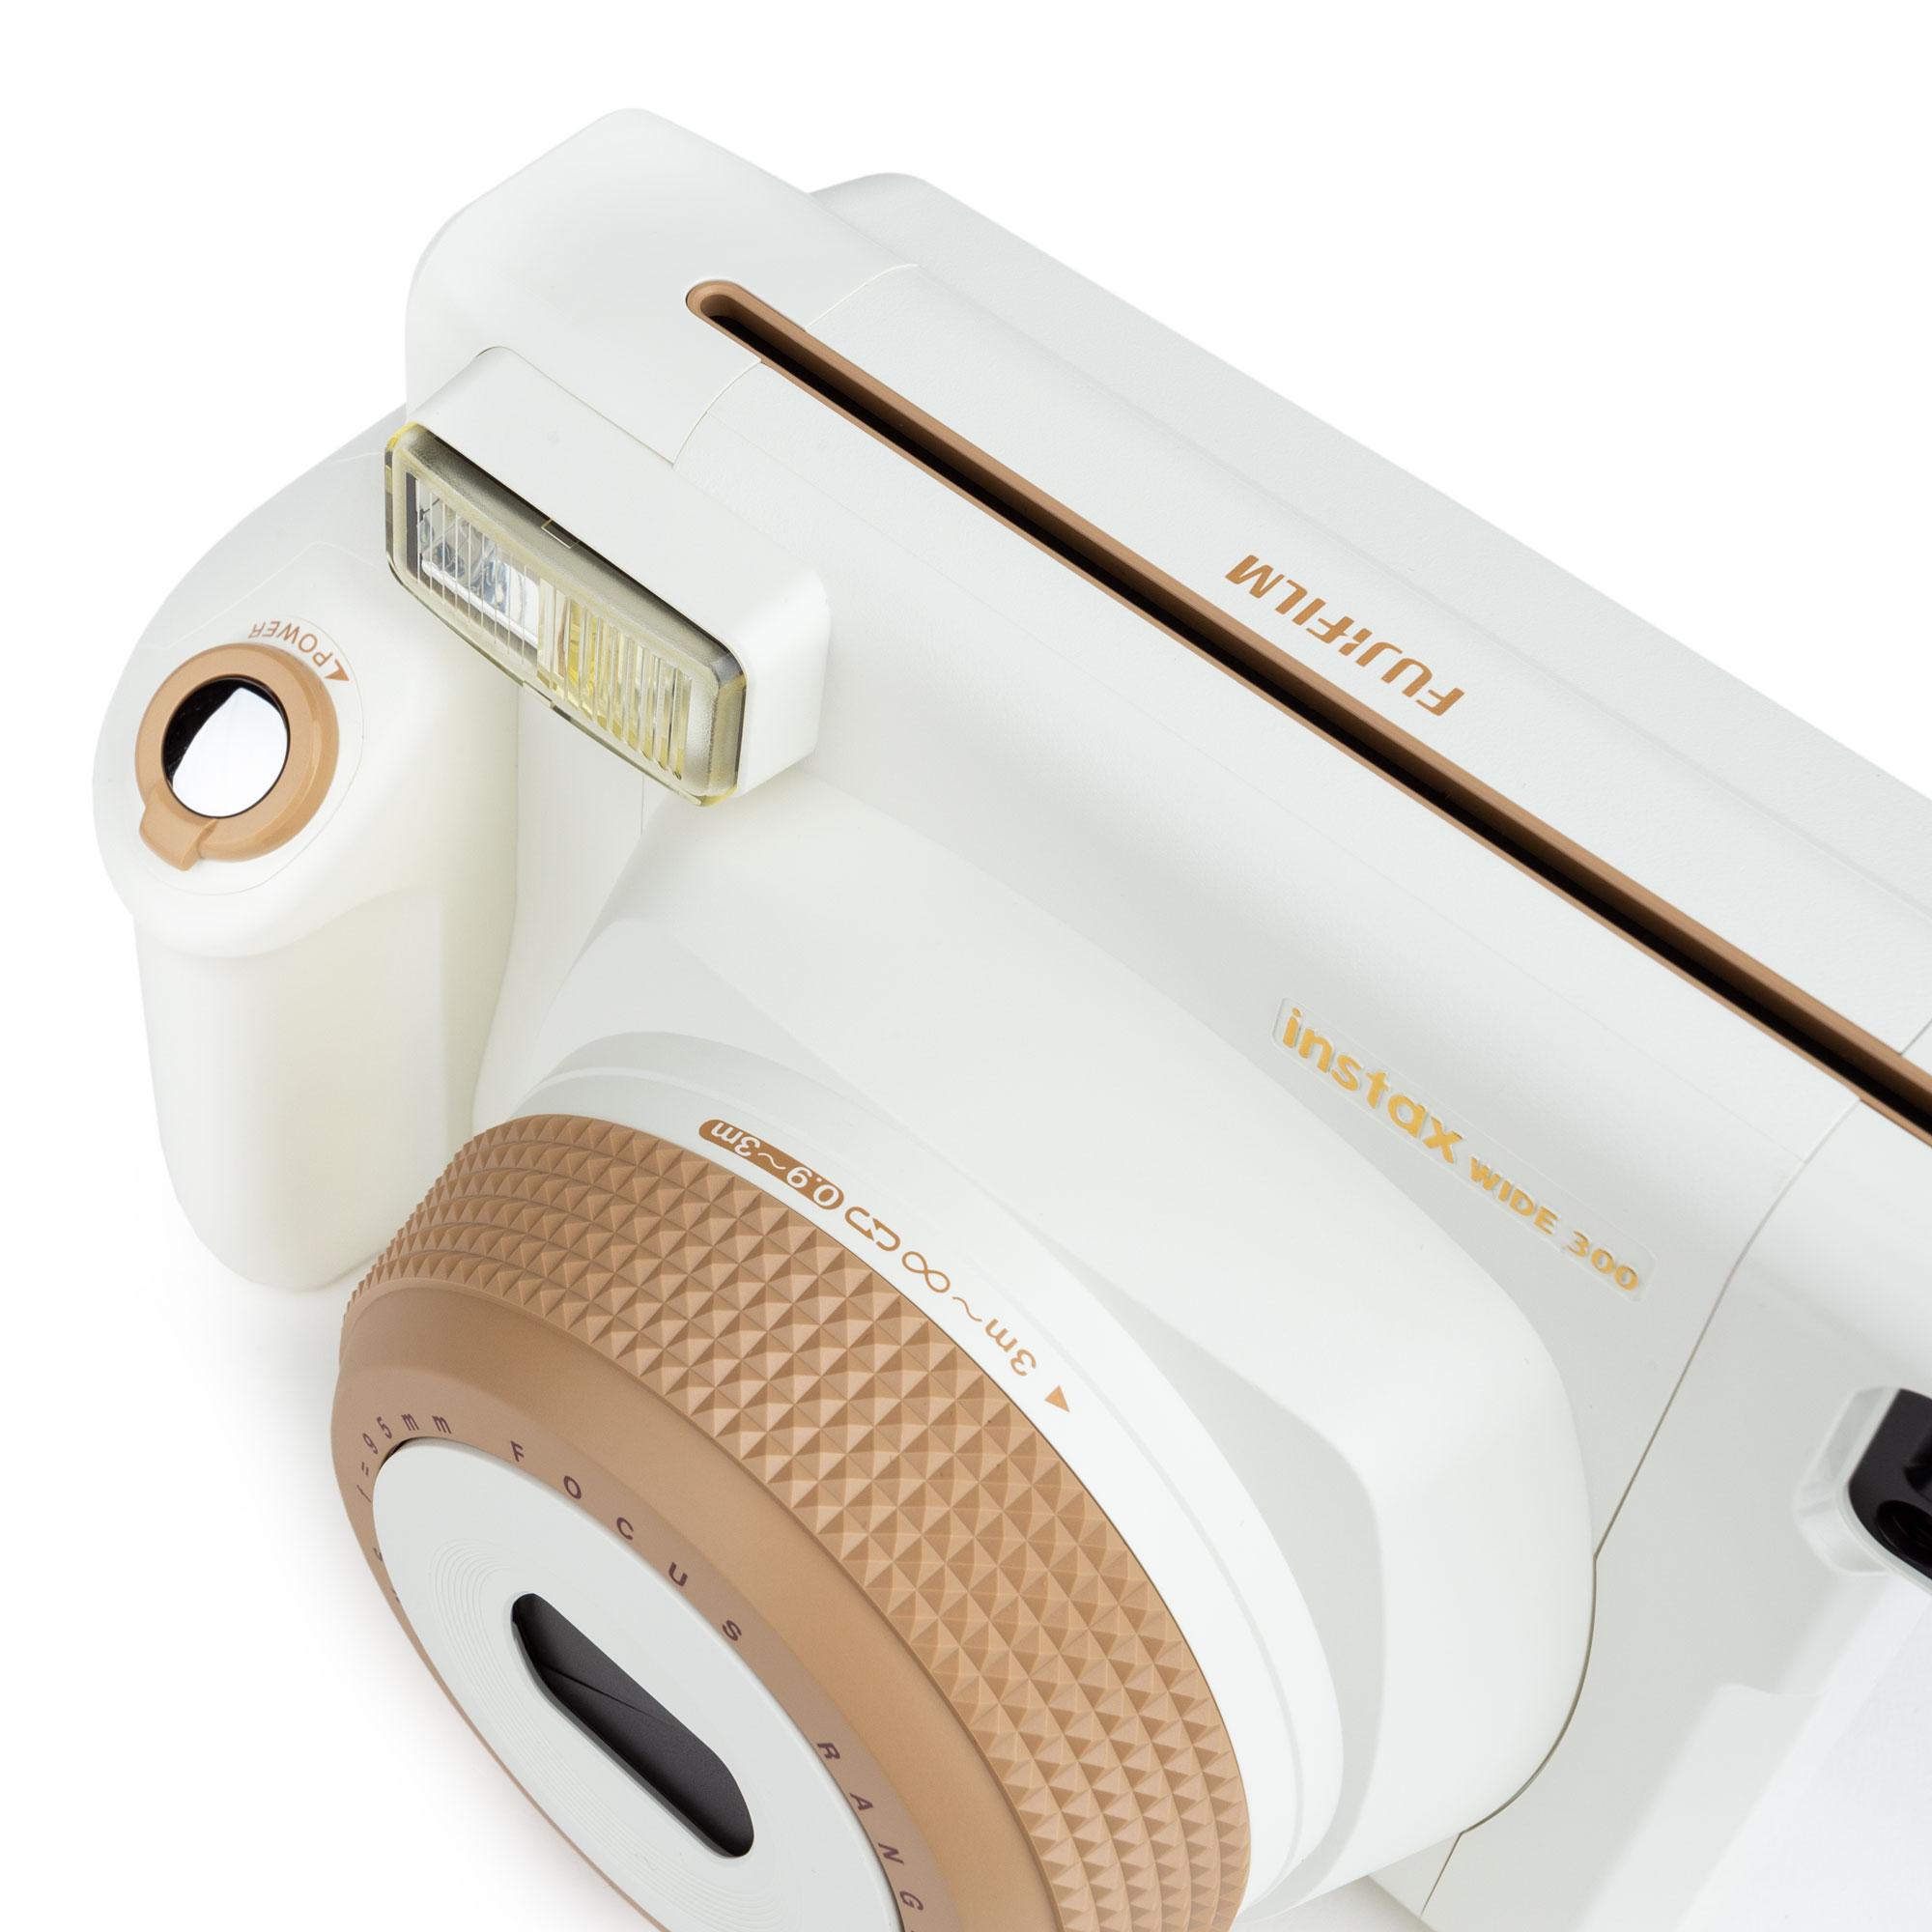 Fuji Instax 300 toffee Sofortbildkamera | Kamera | Instax | Kameras | Photo  Lang